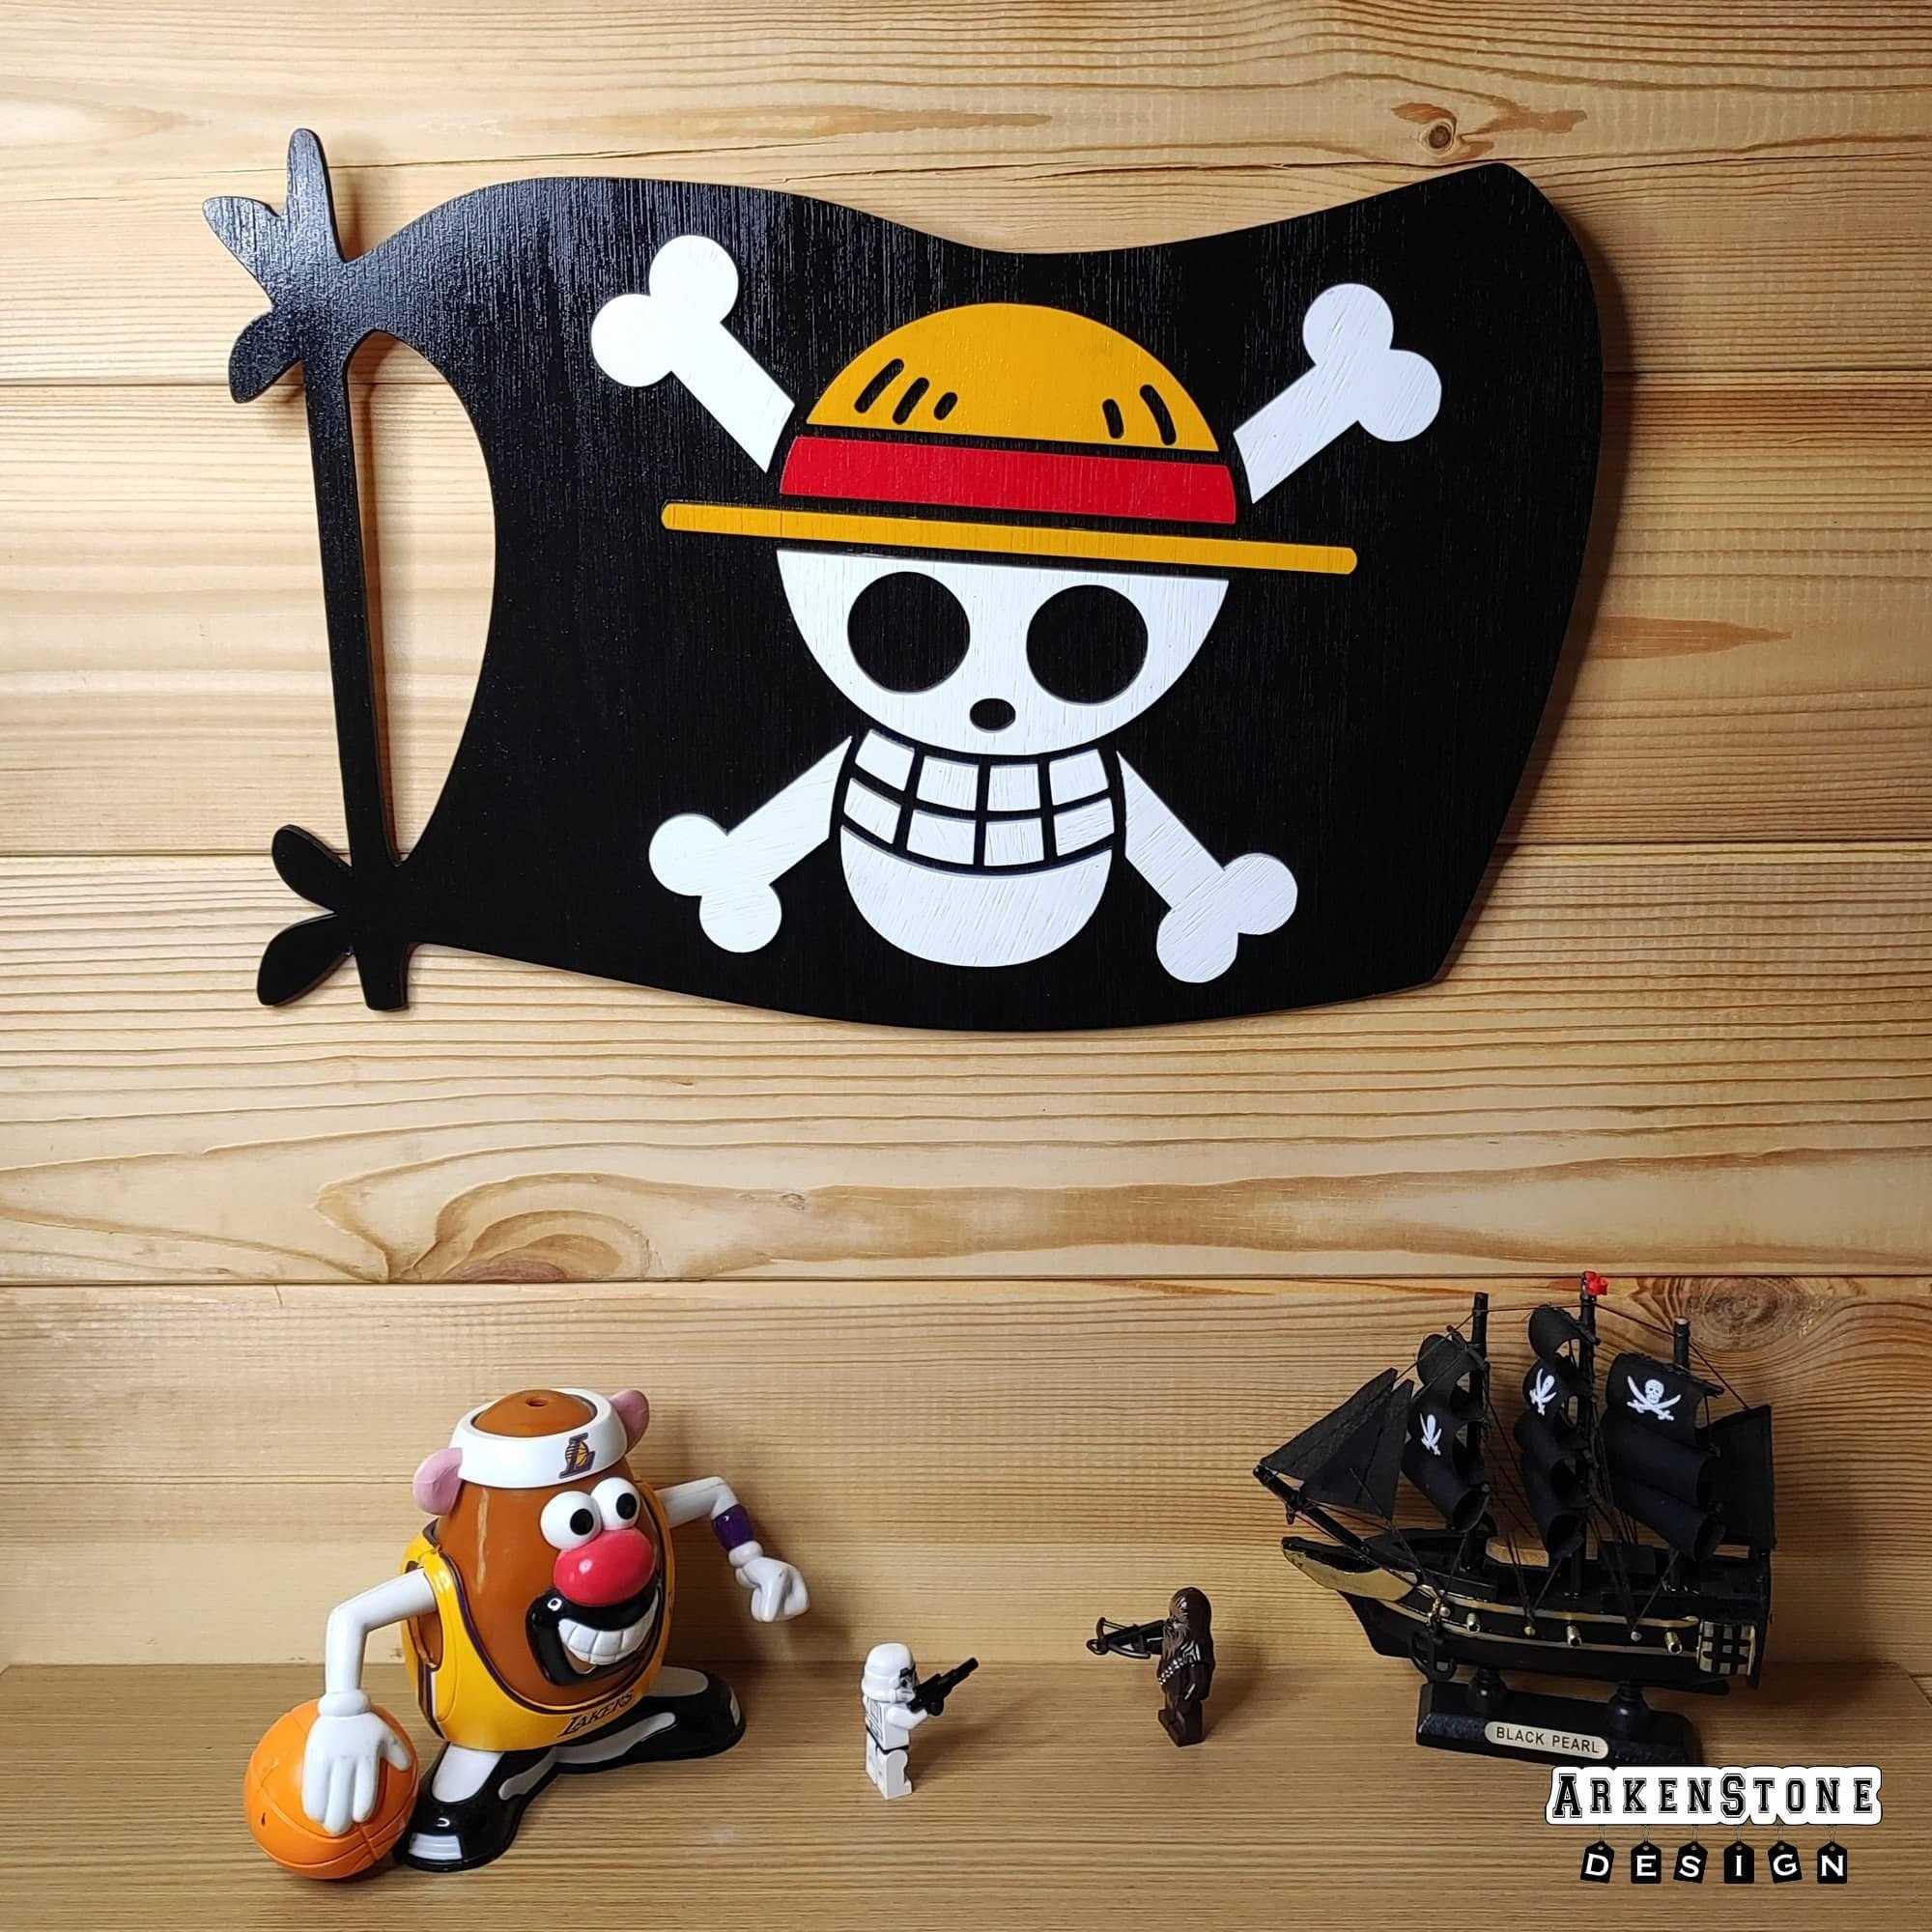 ONE PIECE LUFFY Flag Drapeau Pirate EUR 44,00 - PicClick FR